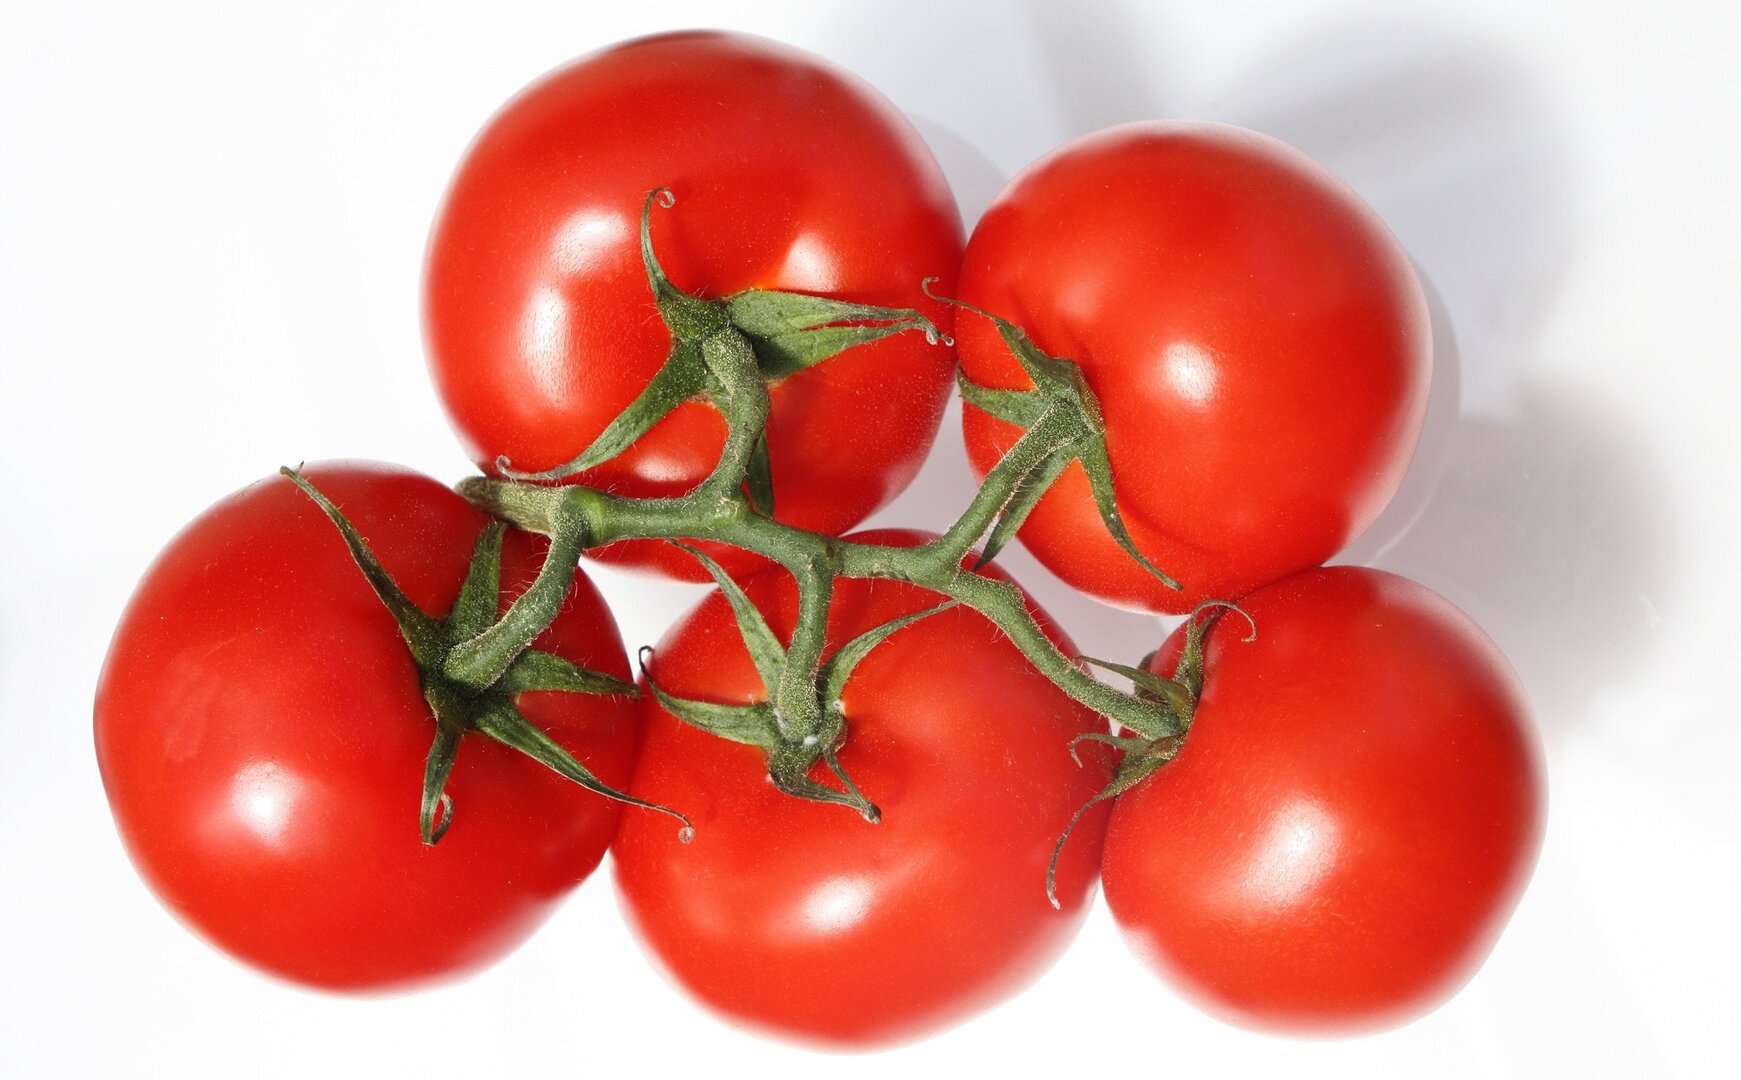 Cherry tomatoes 1 kg